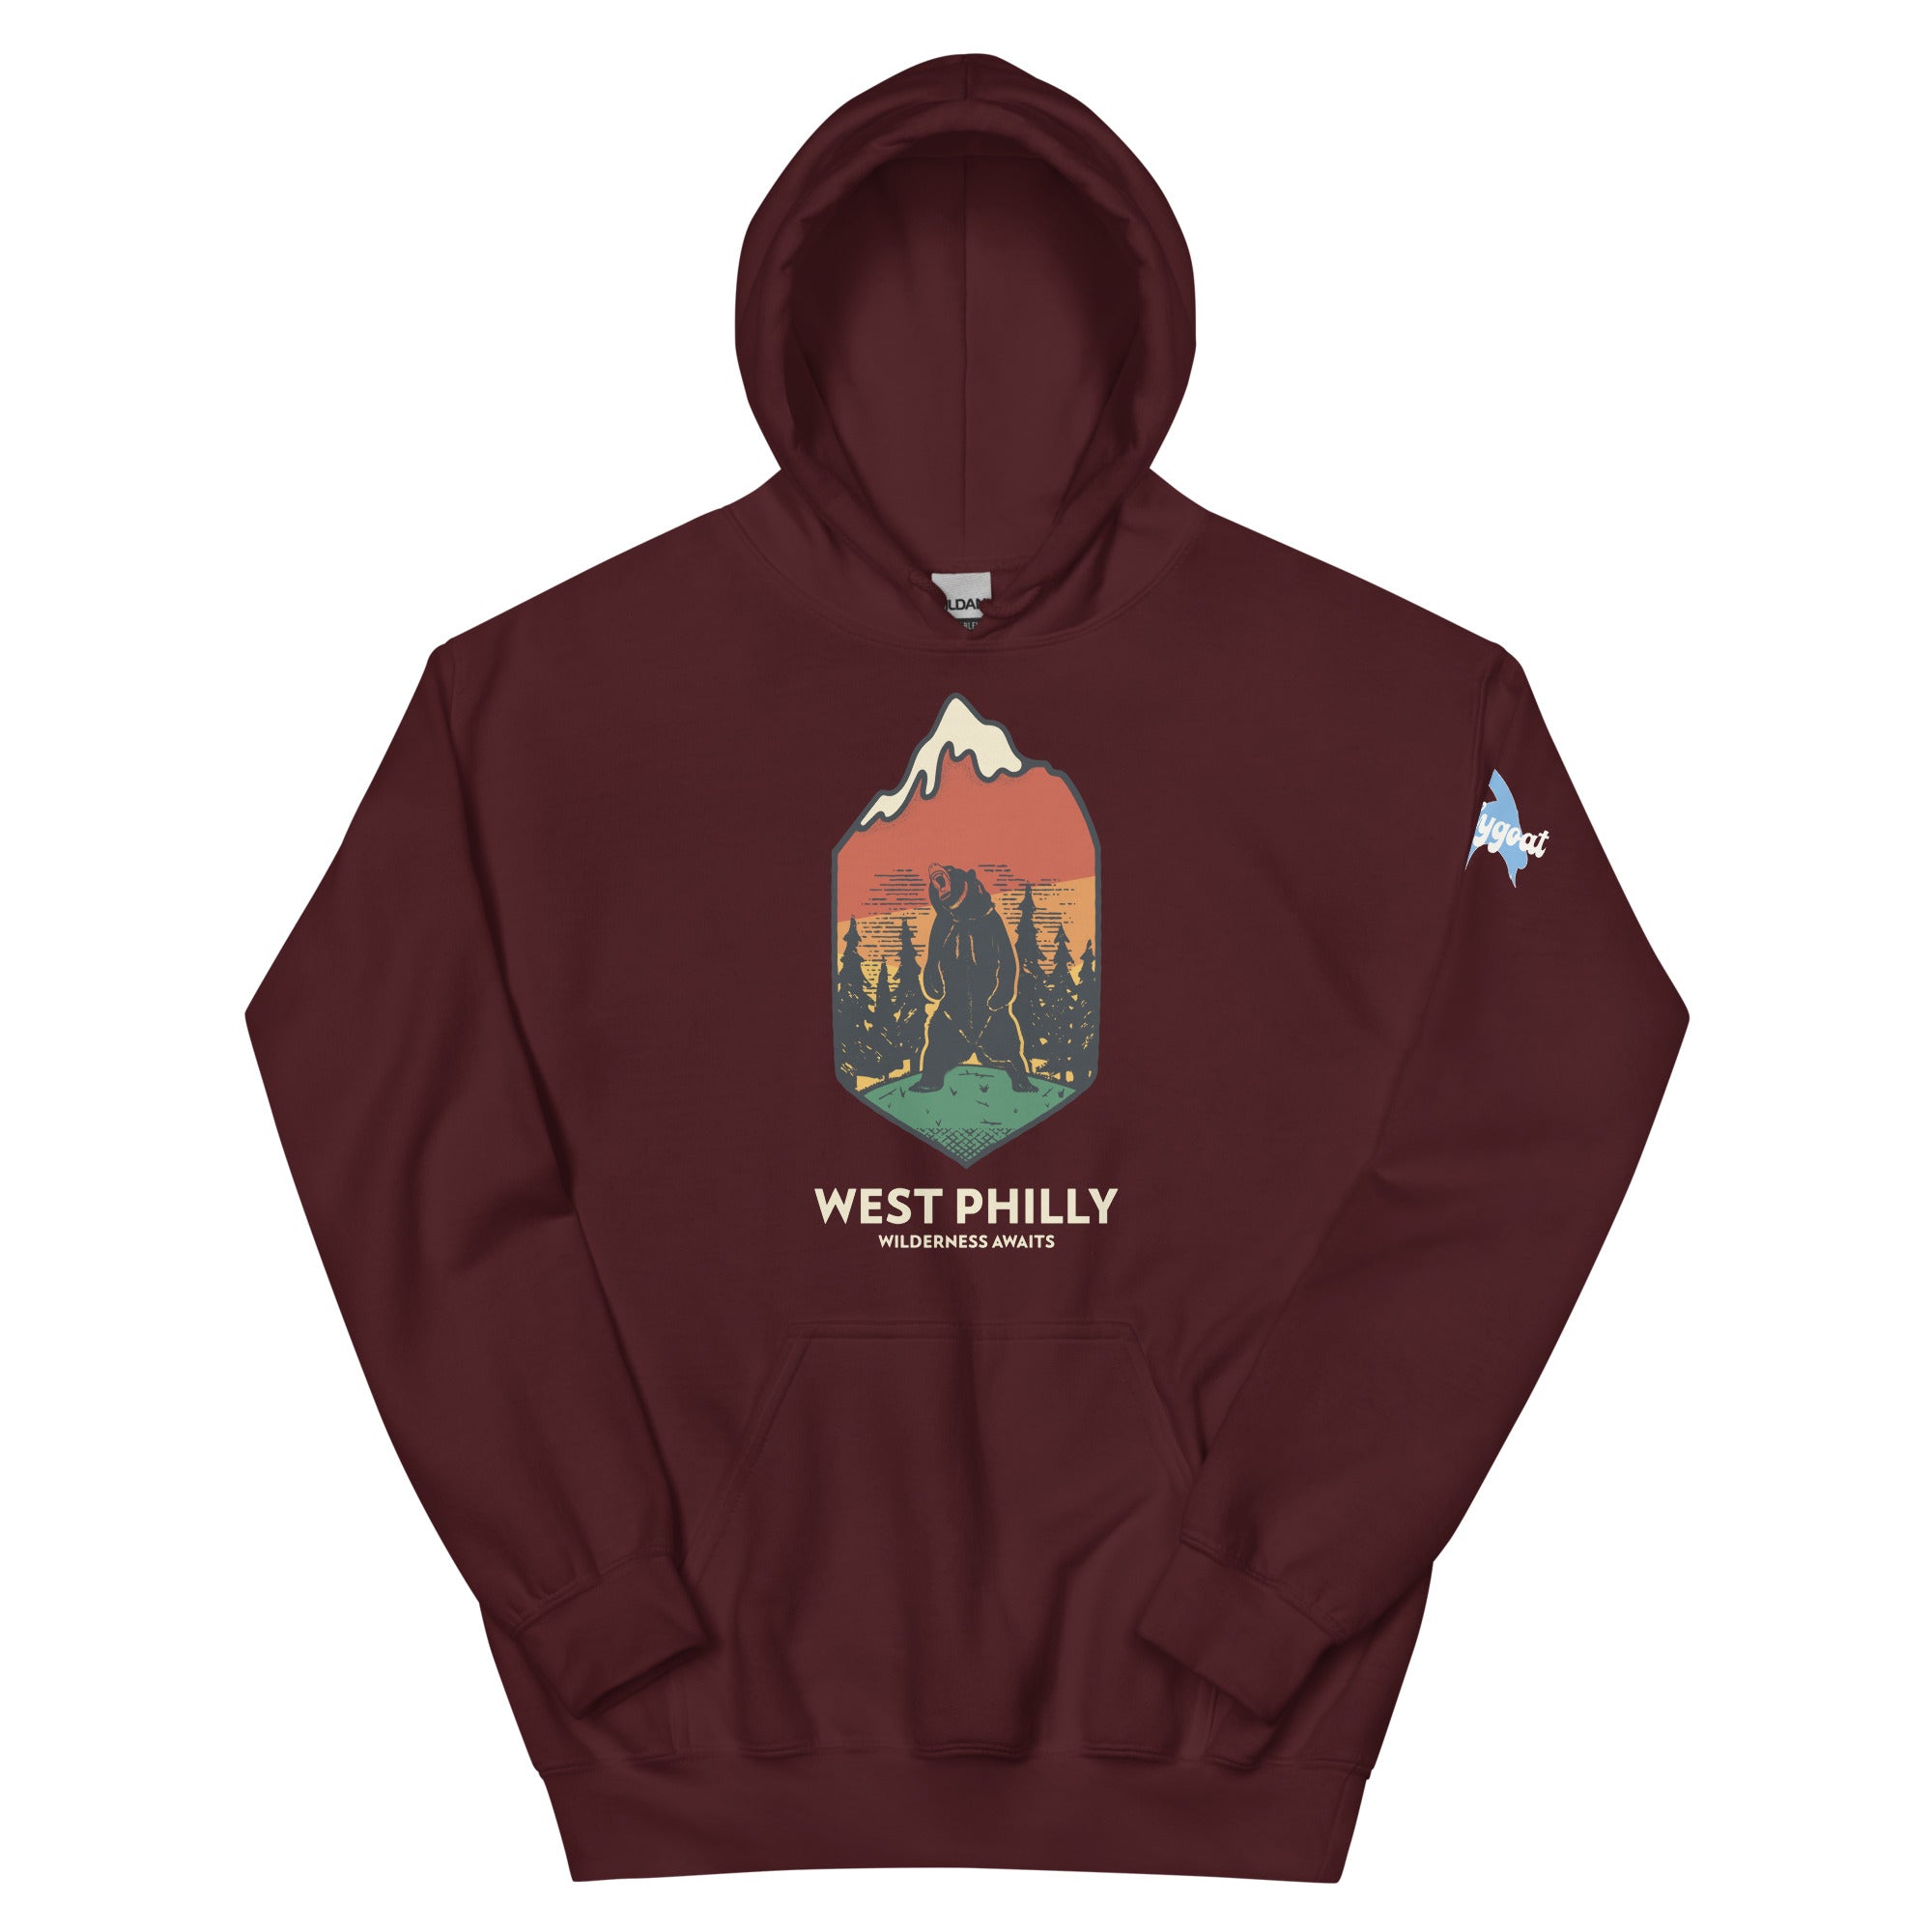 West Philly Philadelphia outdoors wilderness maroon hoodie Phillygoat